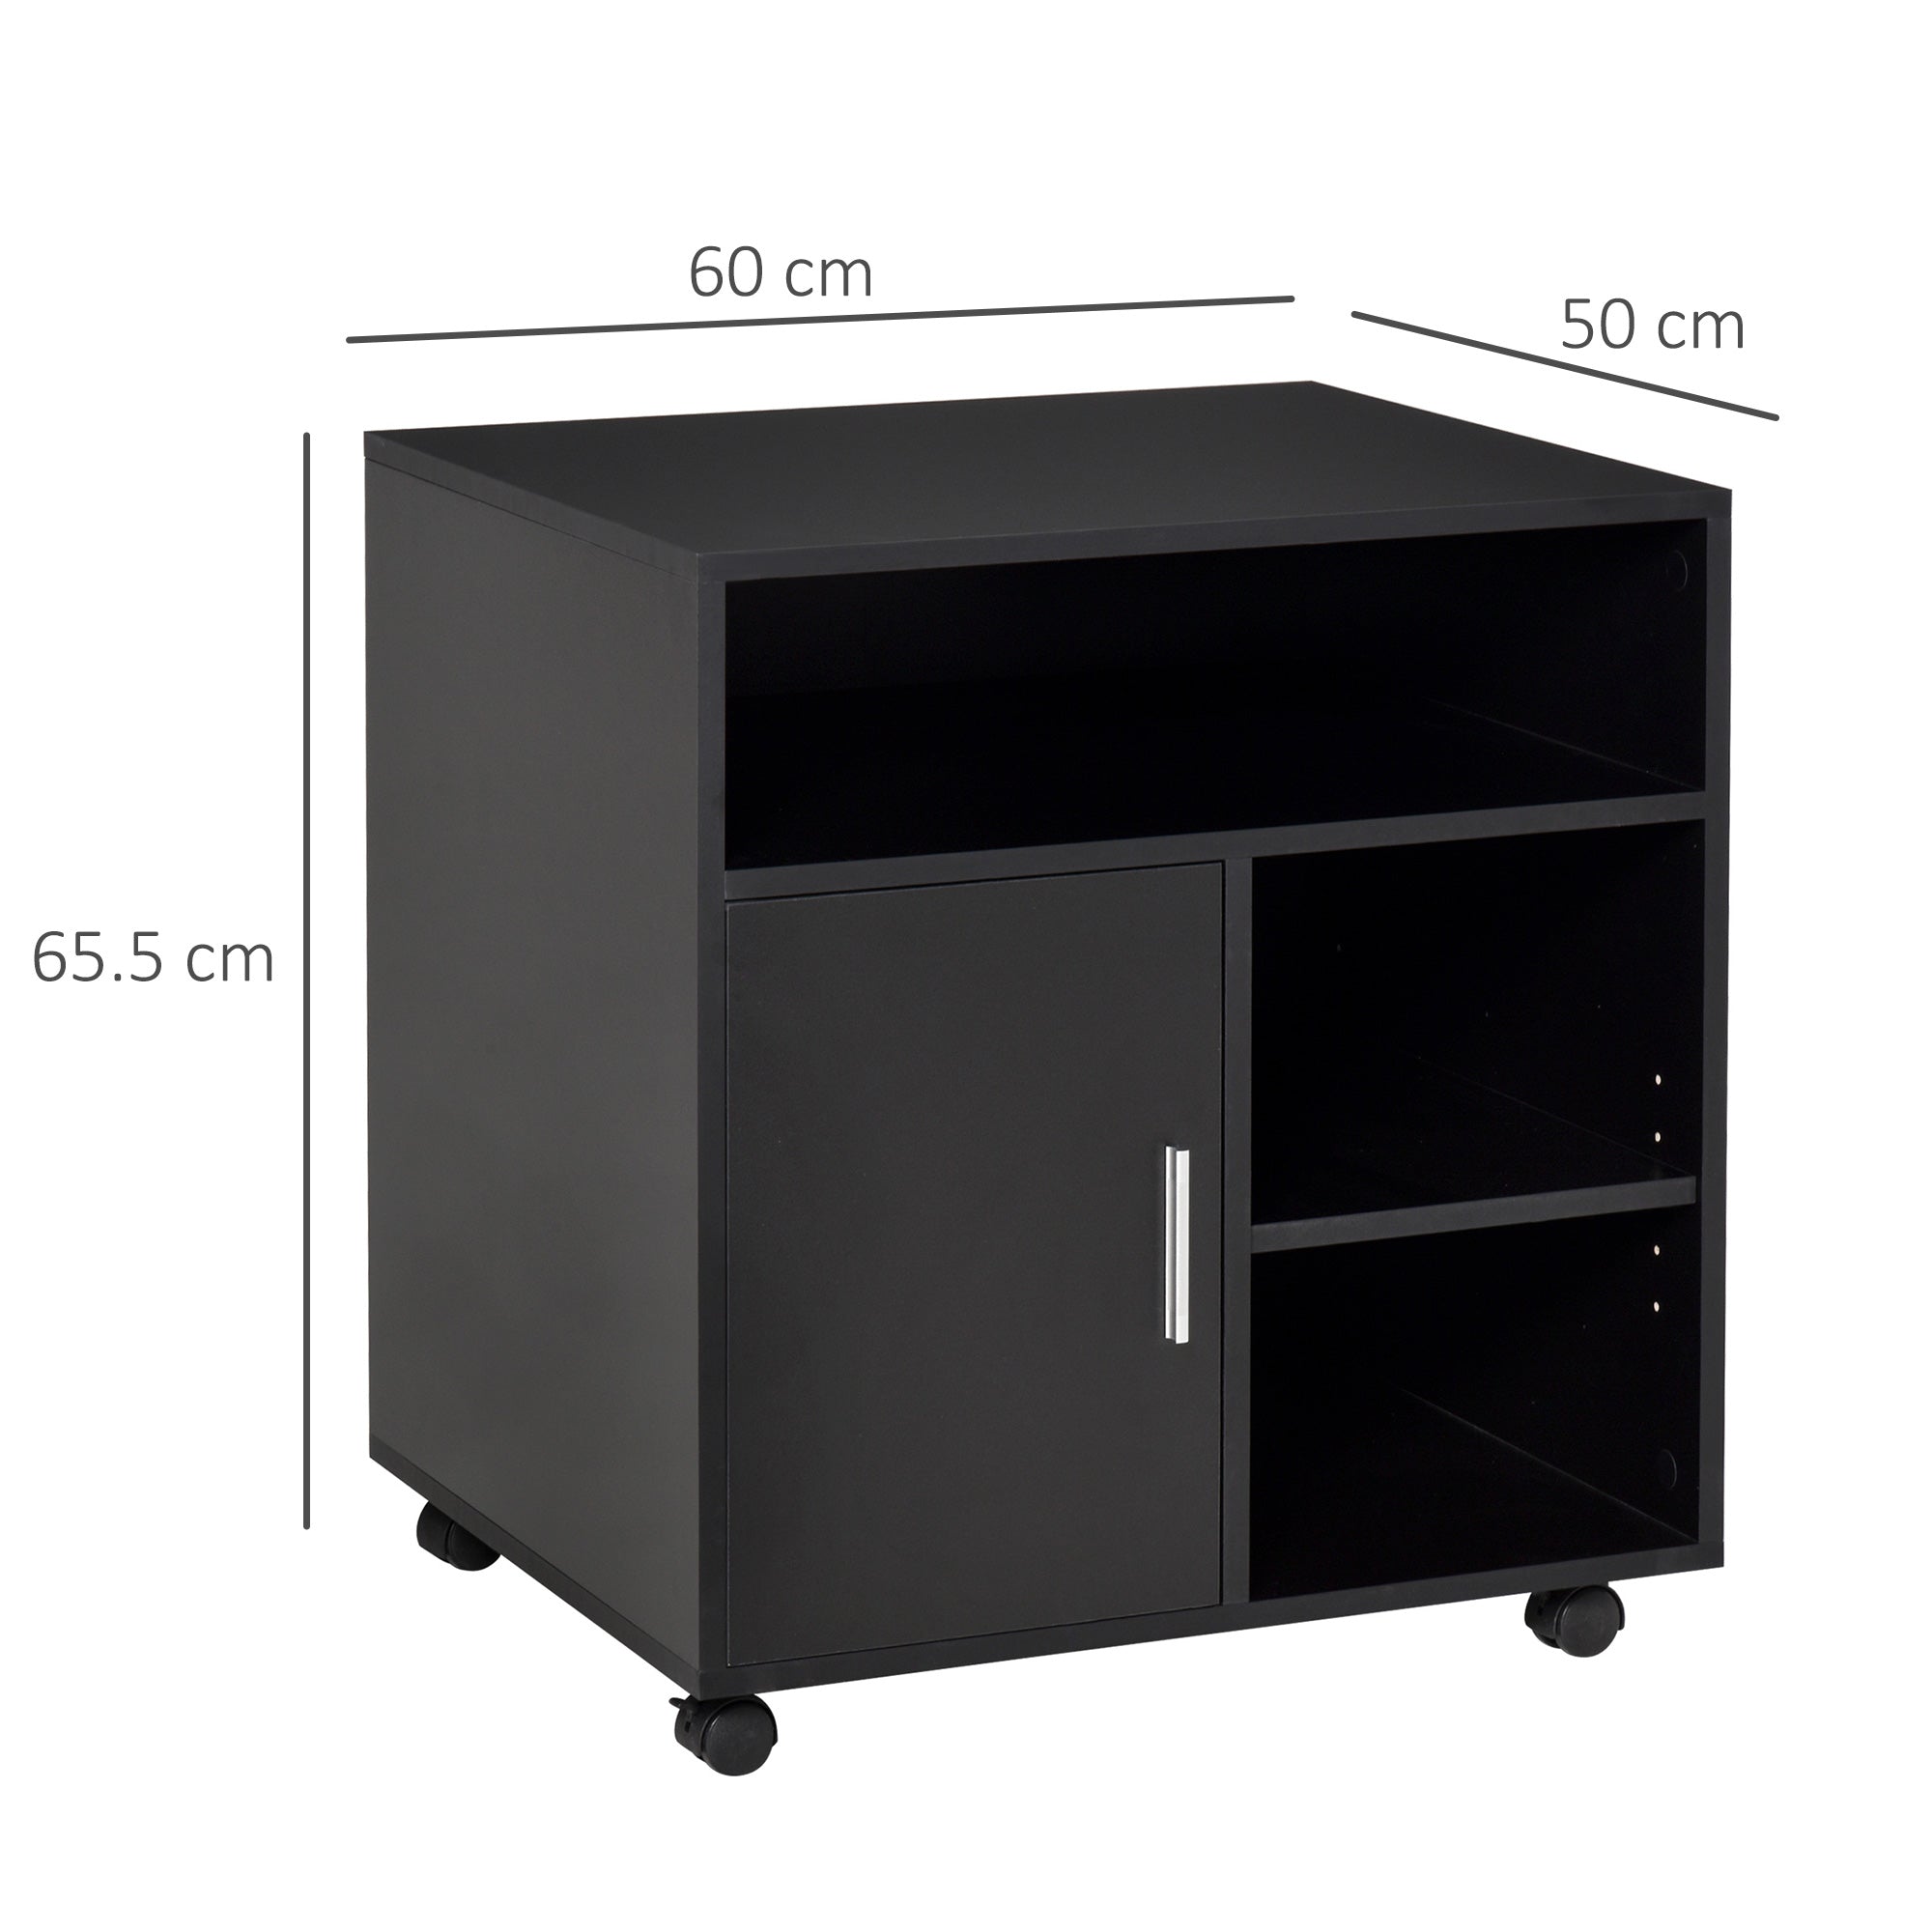 Multi-Storage Printer Stand Unit Office Desk Side Mobile Storage w/ Wheels Modern Style 60L x 50W x 65.5H cm - Black-2